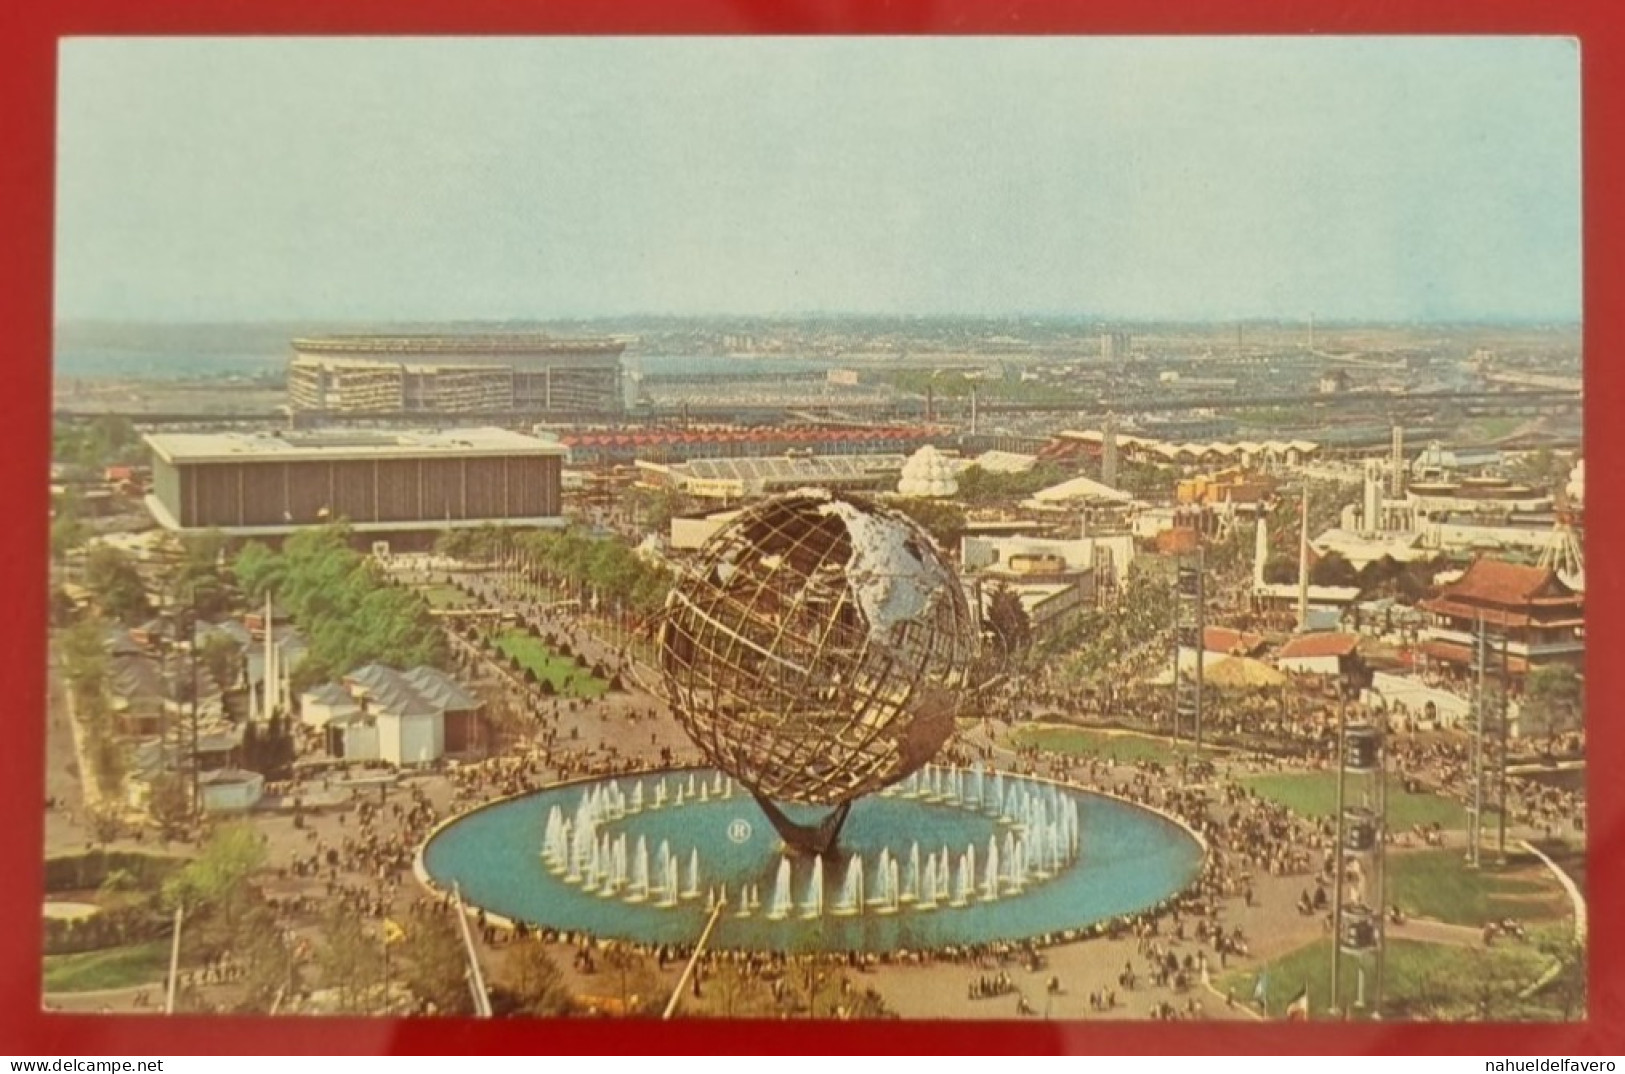 Uncirculated Postcard - USA - NY, NEW YORK WORLD'S FAIR 1964-65 - UNISPHERE - Exhibitions